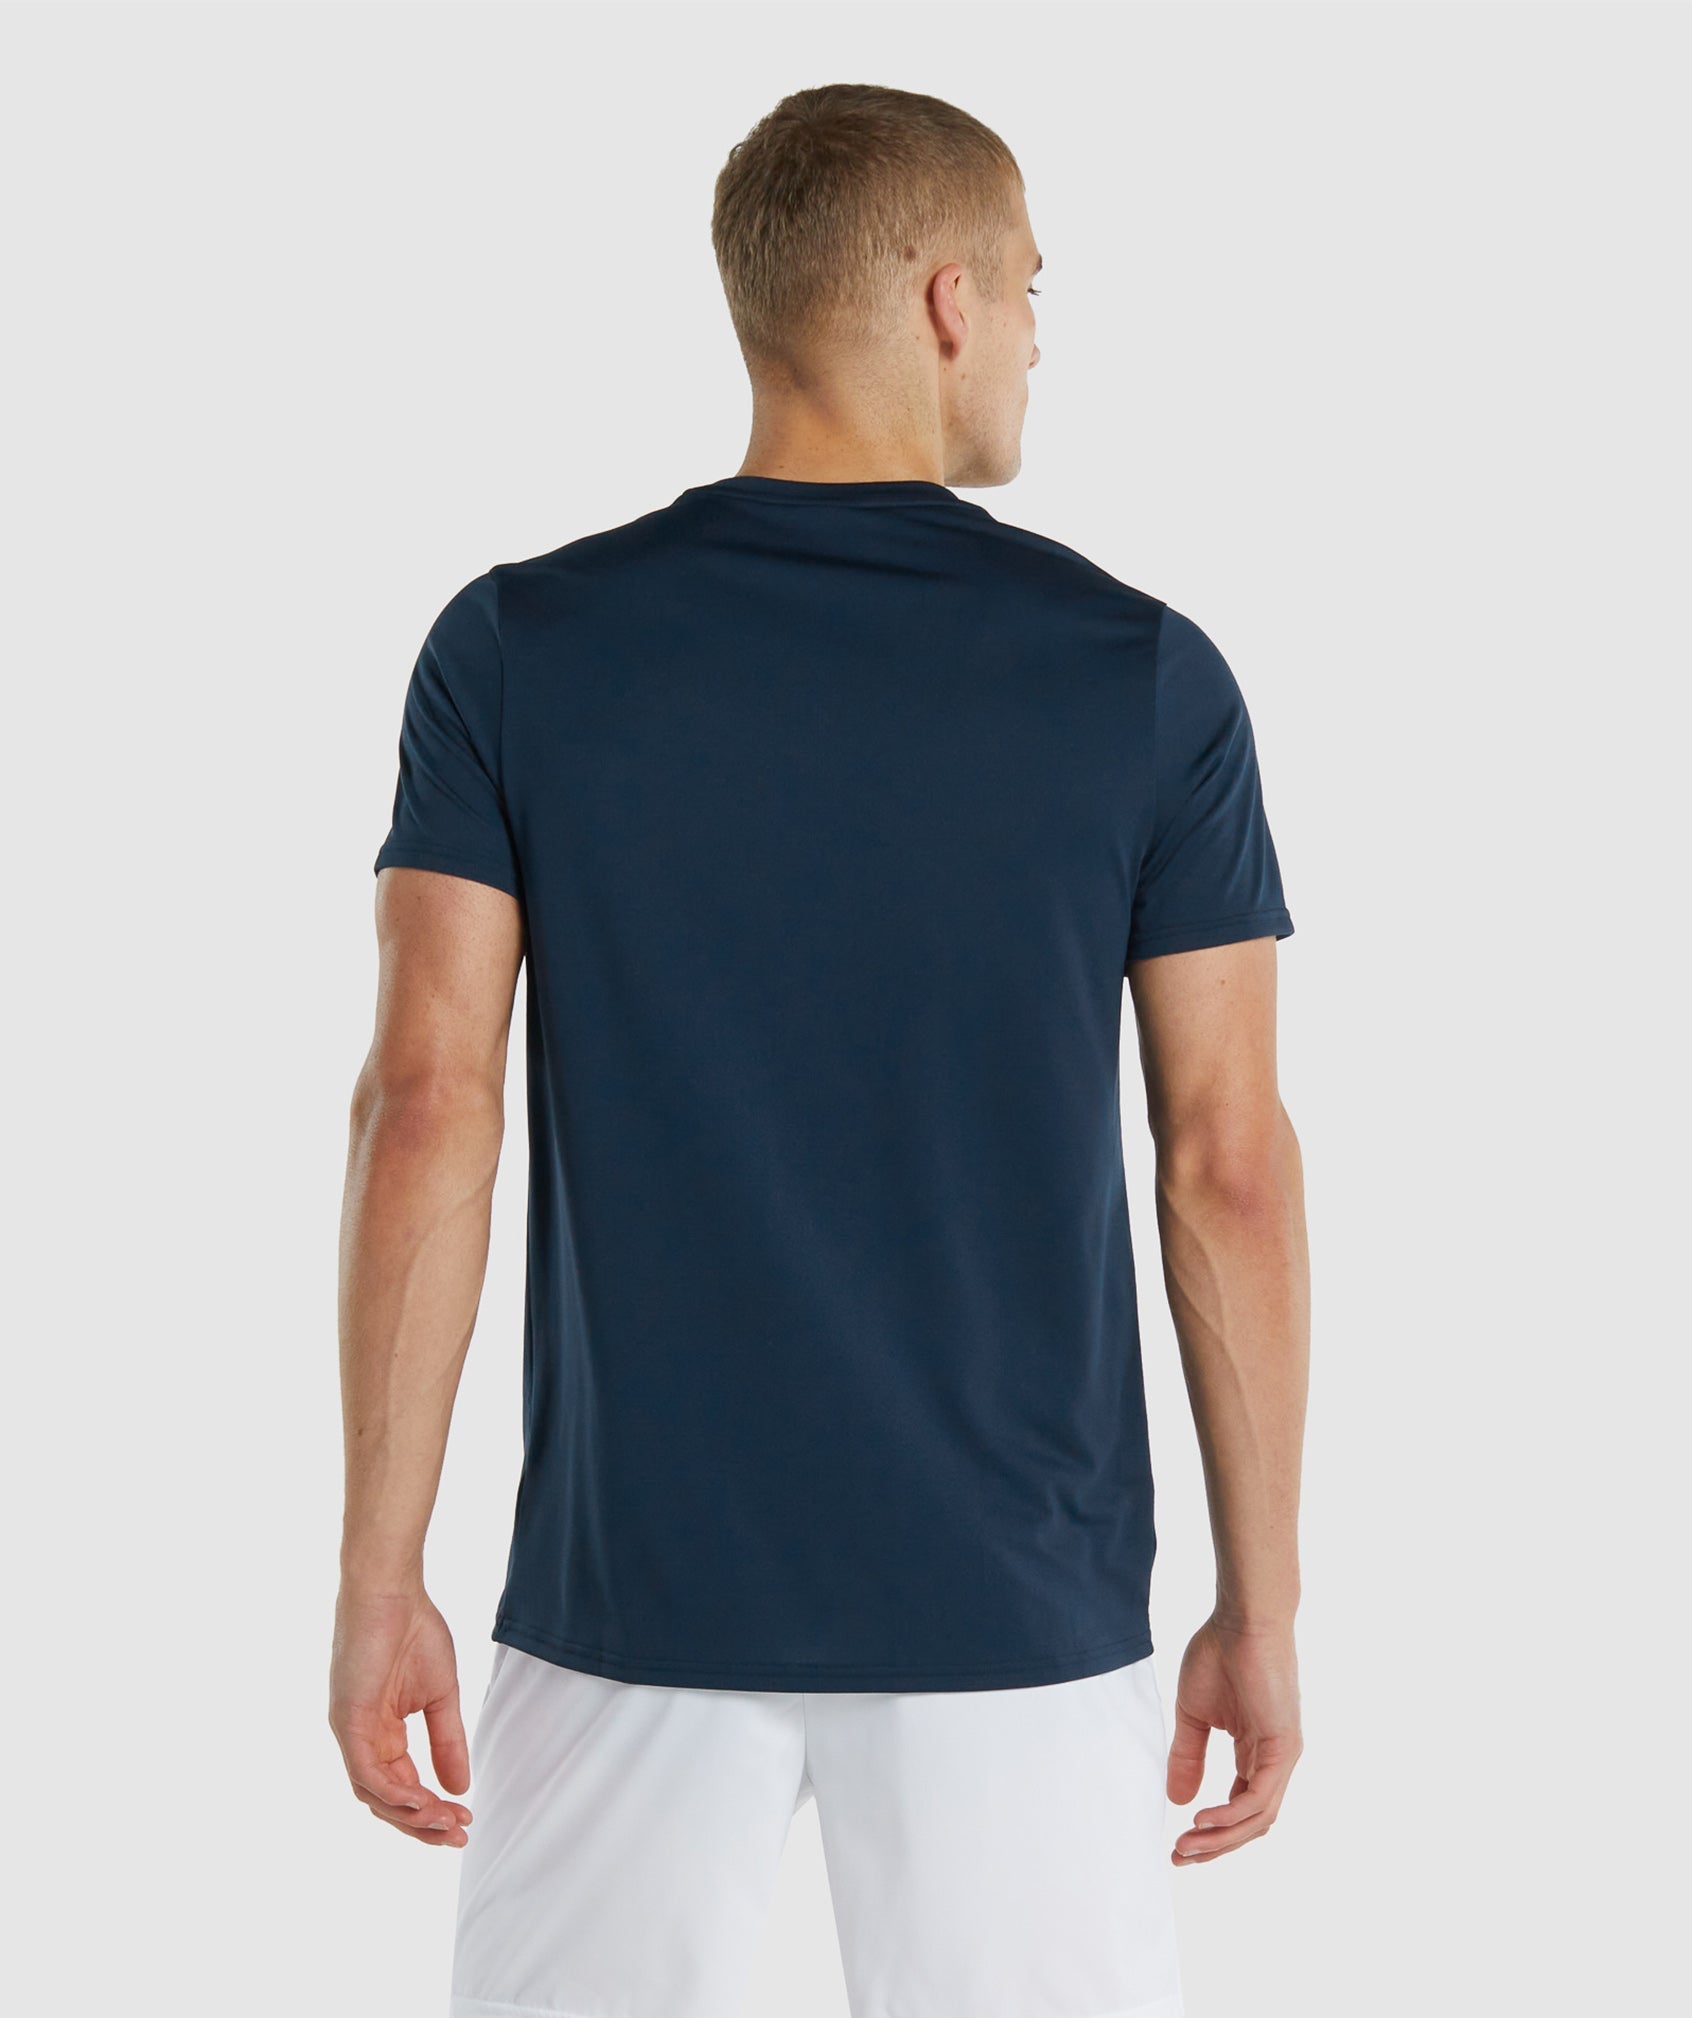 Gymshark Arrival Regular Fit T-shirts Herren Navy | 5619078-PW